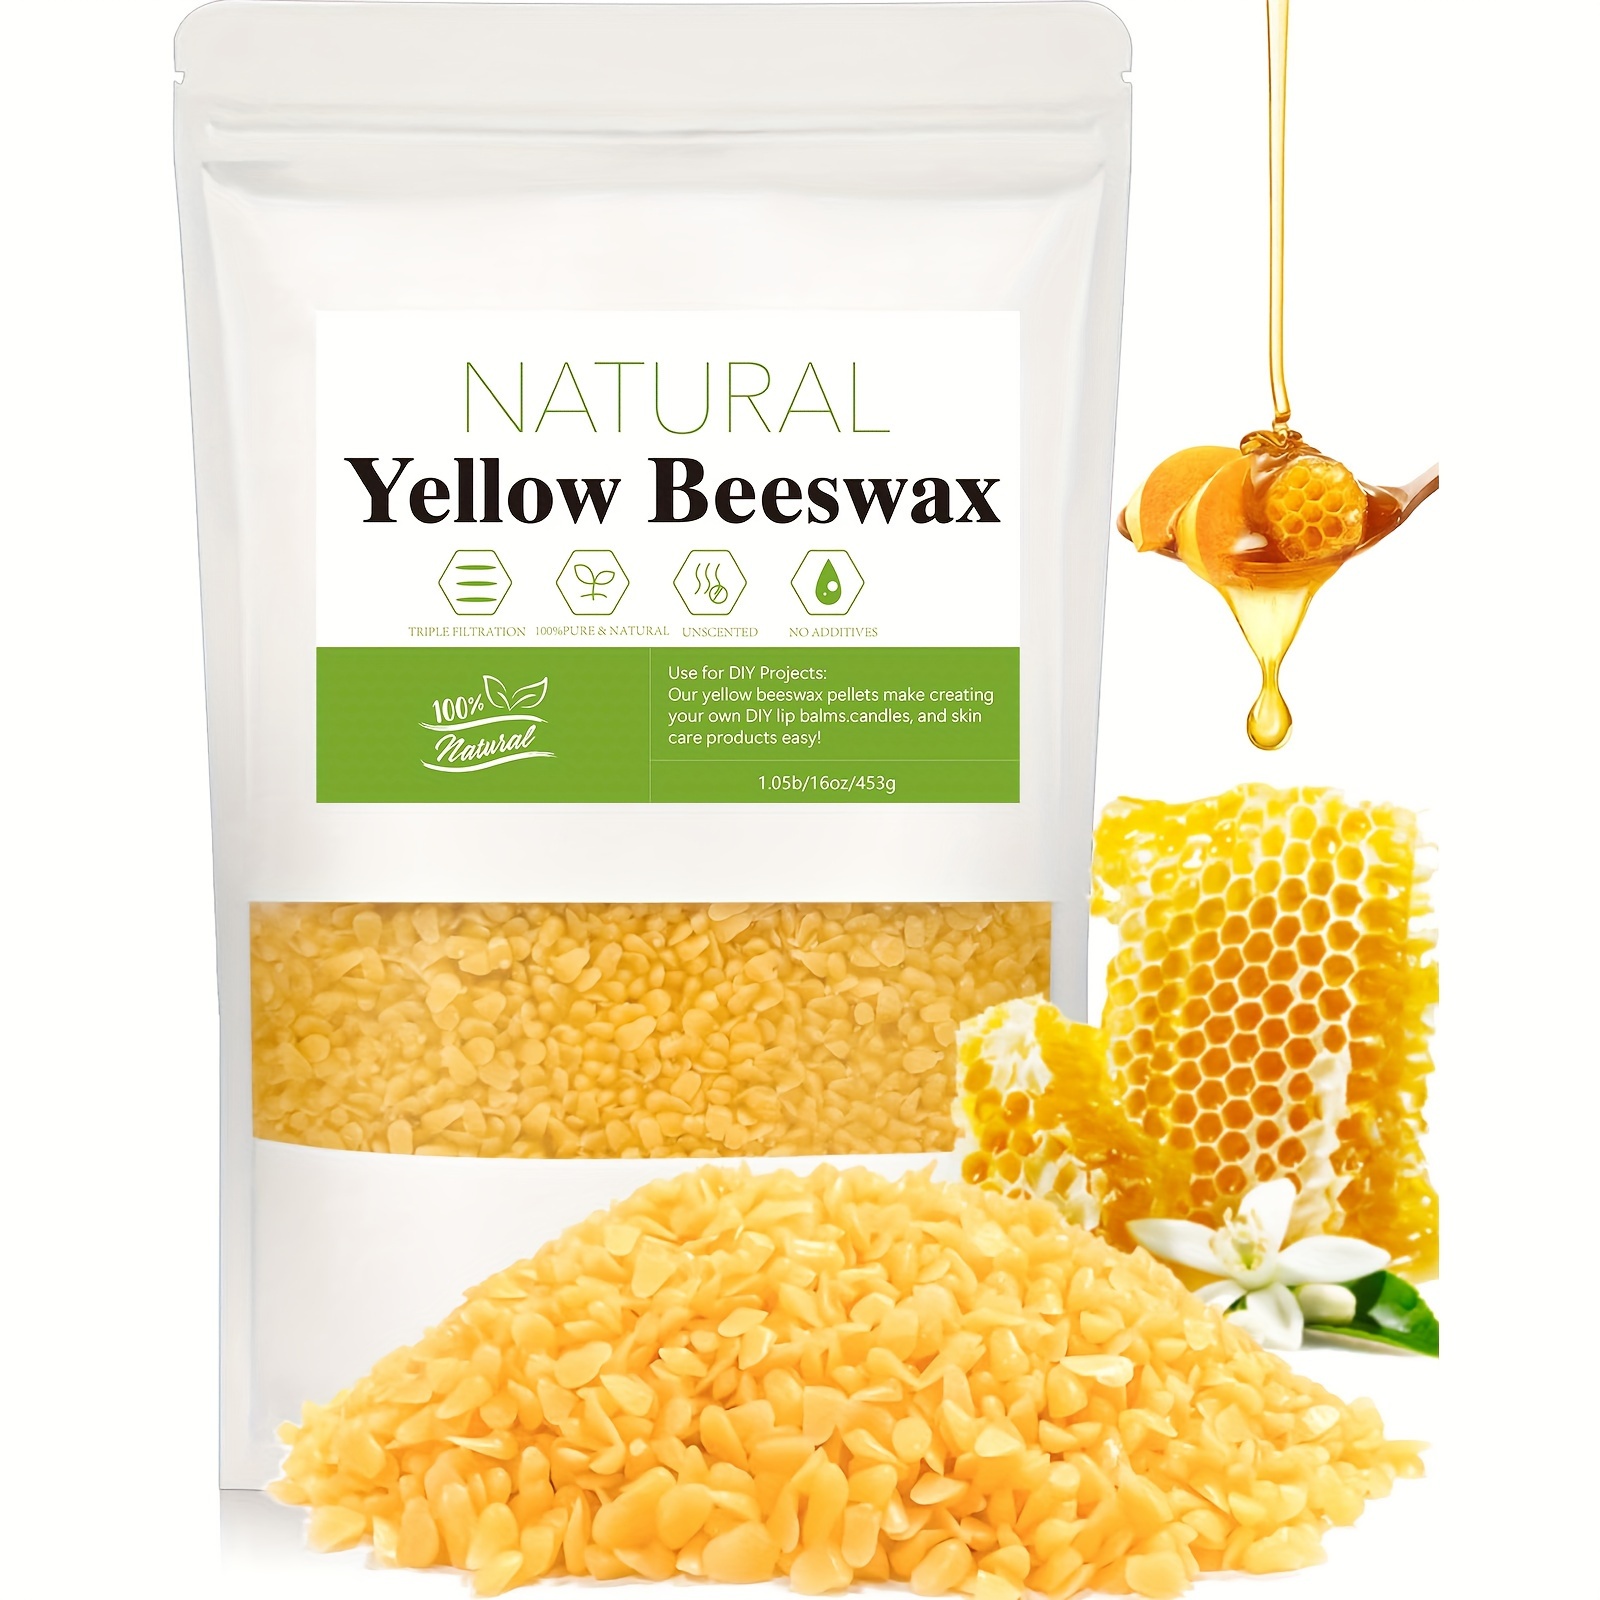 Beeswax Pellets, Yellow 7 oz Food Grade Natural Organic Bees Wax, Triple  Filtered Bees Wax Pastilles for DIY Lip Balm Recipes Lotions Candles Skin